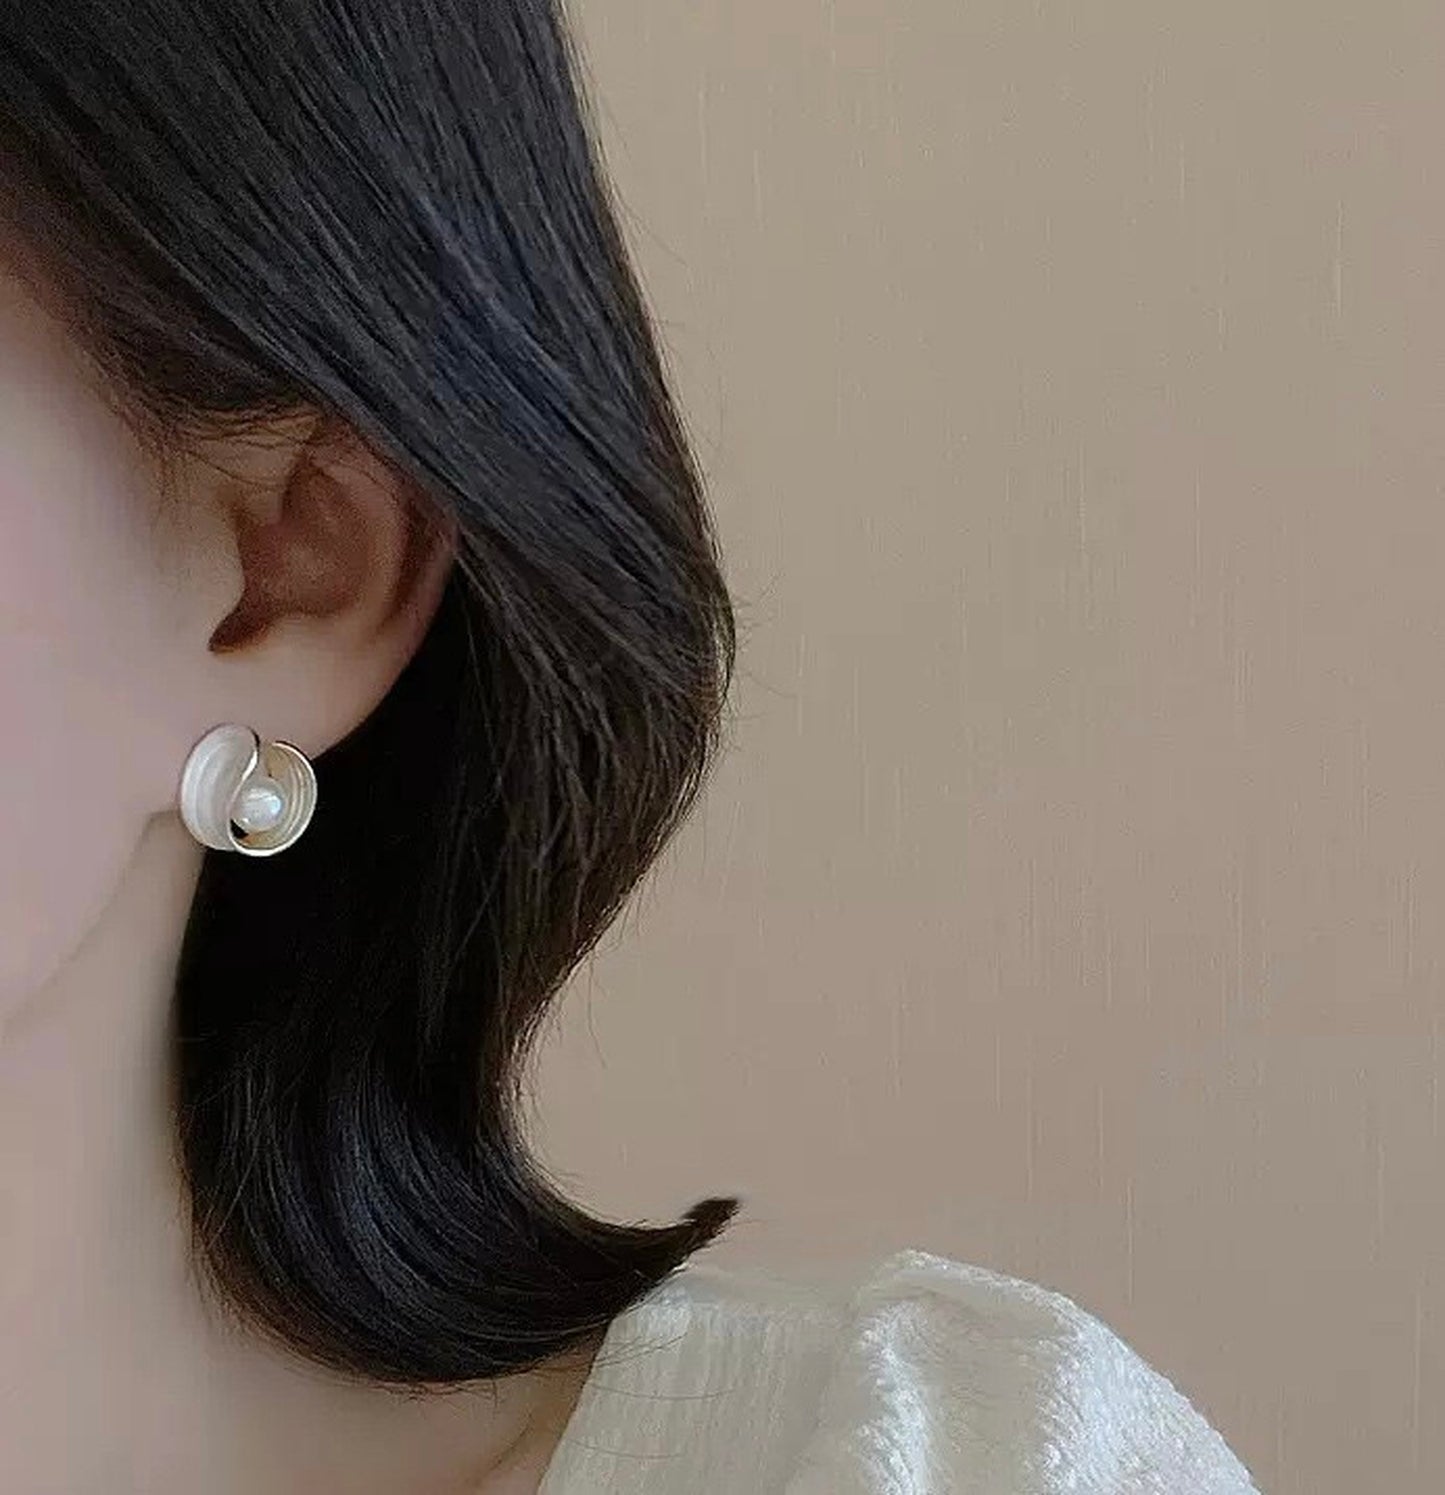 Mother of pearl earrings, Pearl stud earrings, Sea shell earrings, Unique earrings, Infinity loop earrings, Summer vacation jewelry,Handmade